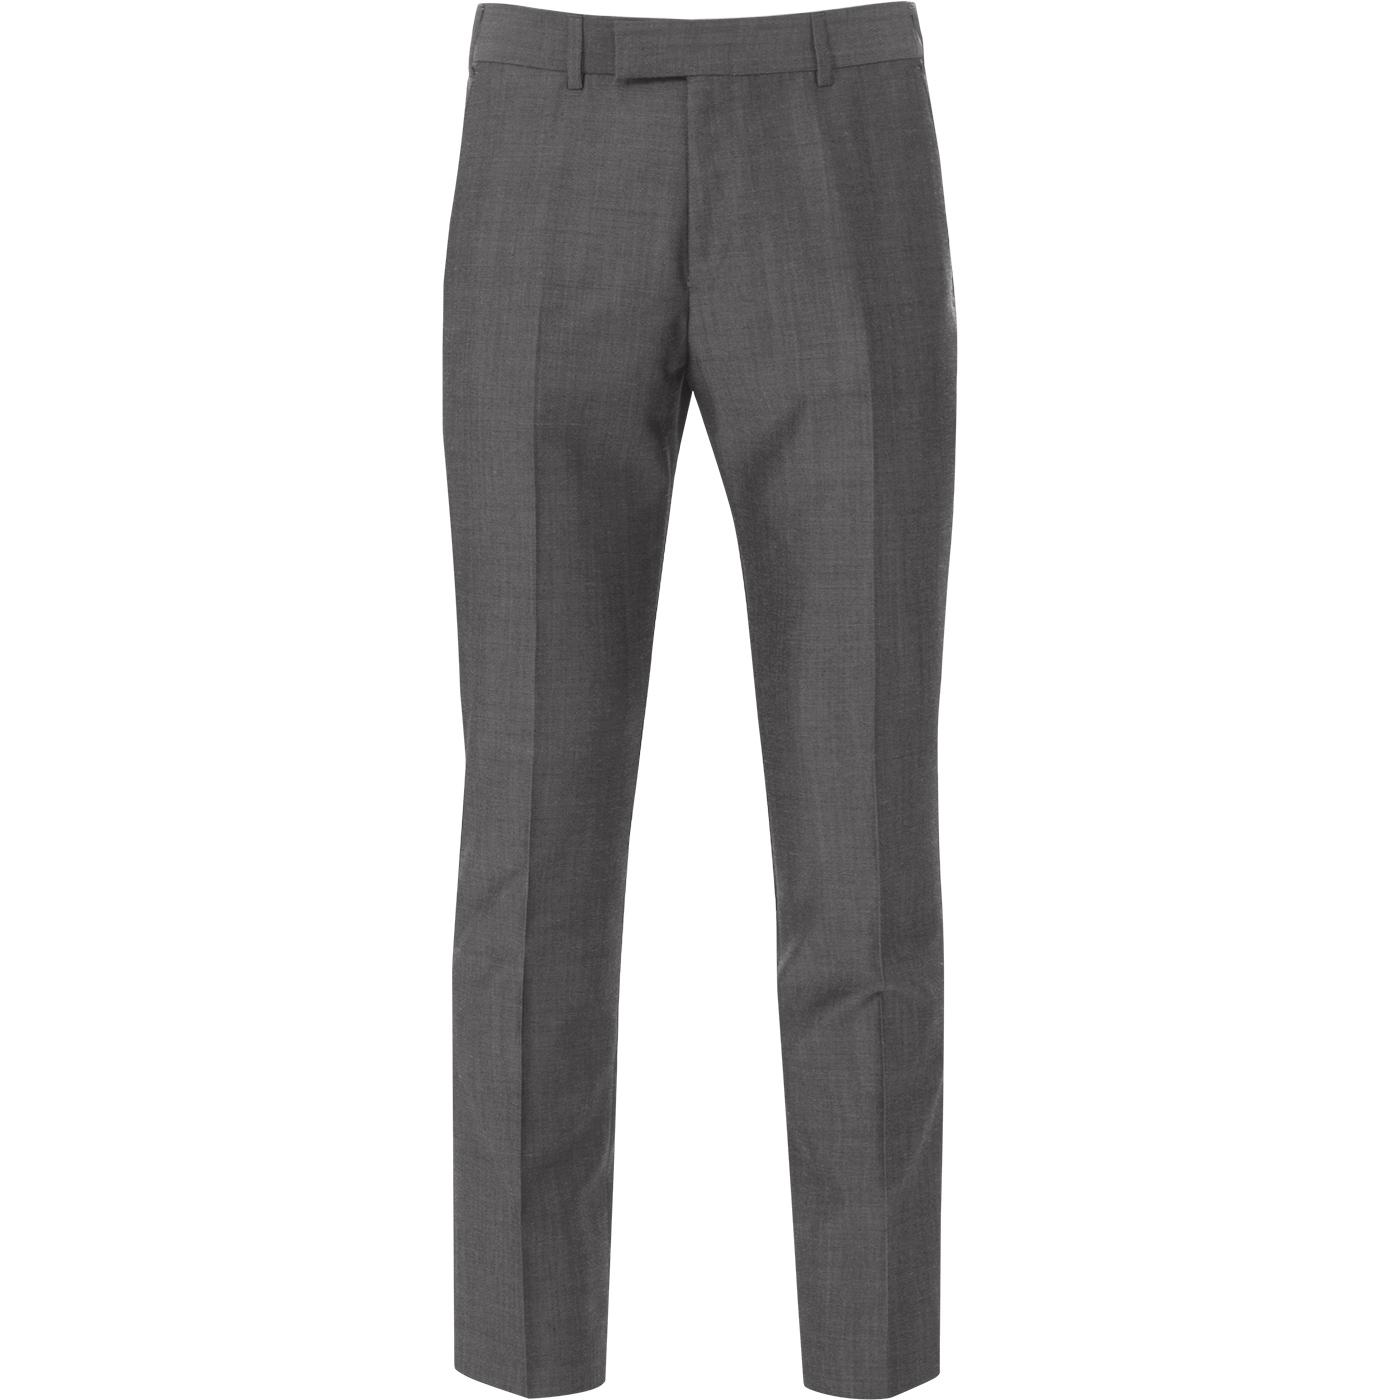 Retro & Mod Tailored Trousers, Suit Pants | Madcap England